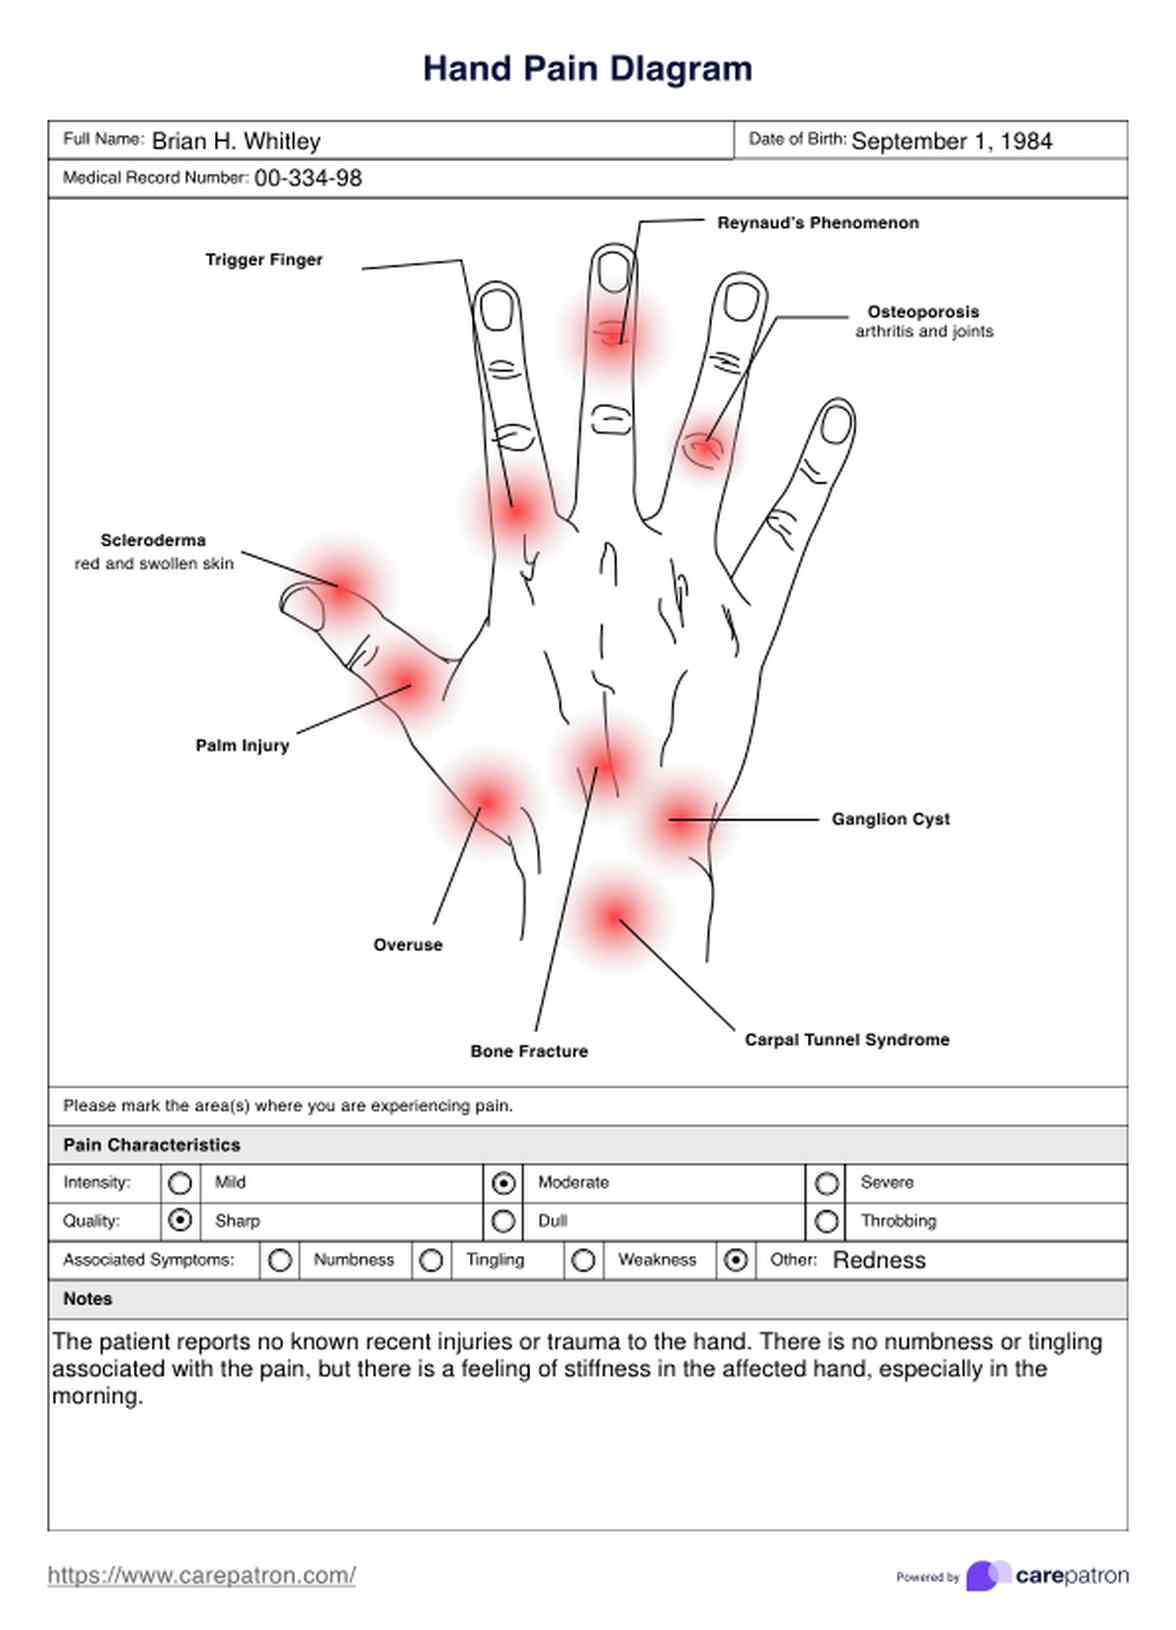 Hand Pain Diagrams PDF Example